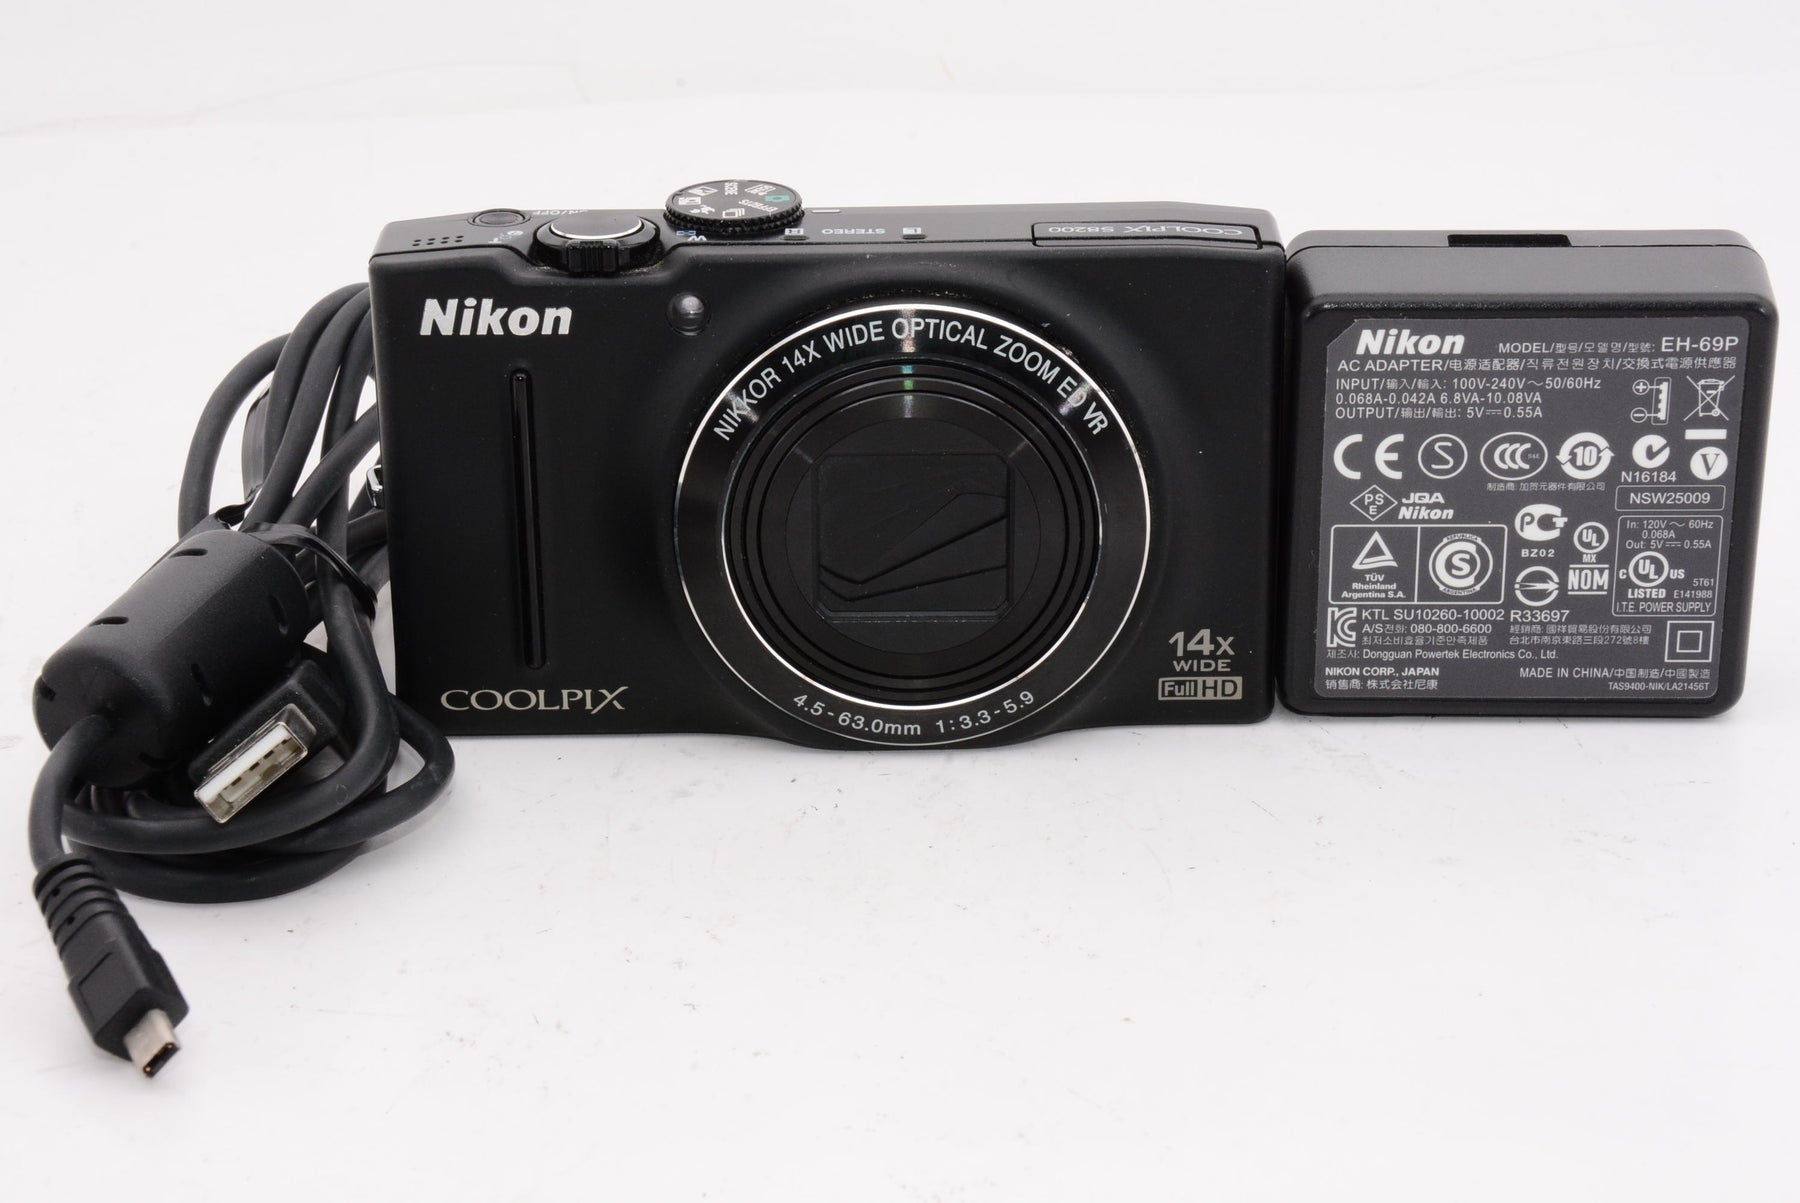 Nikon デジタルカメラ COOLPIX S8200